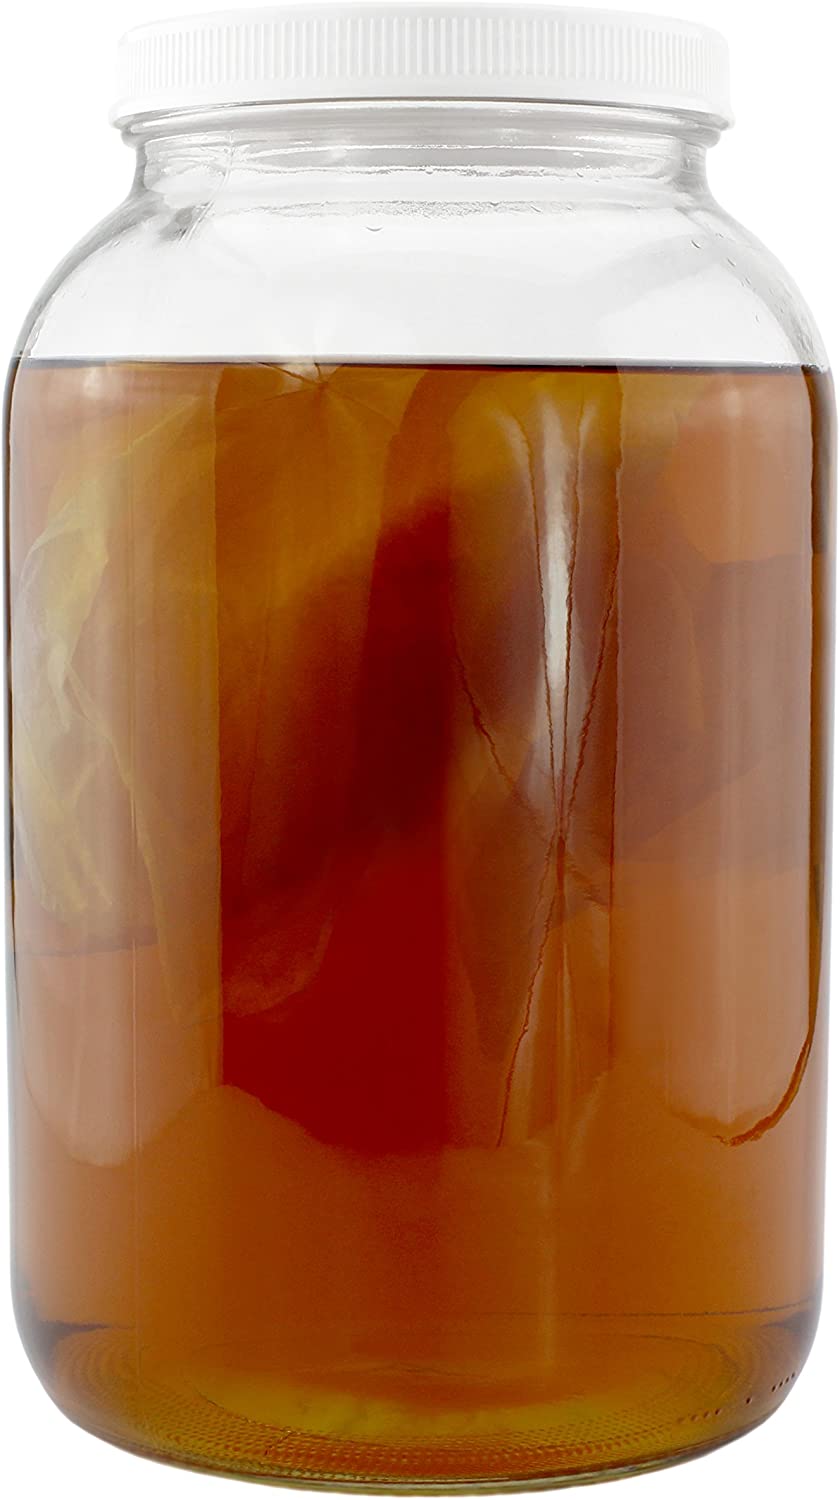 Two 1-Gallon Glass Kombucha Jars (2-Pack)